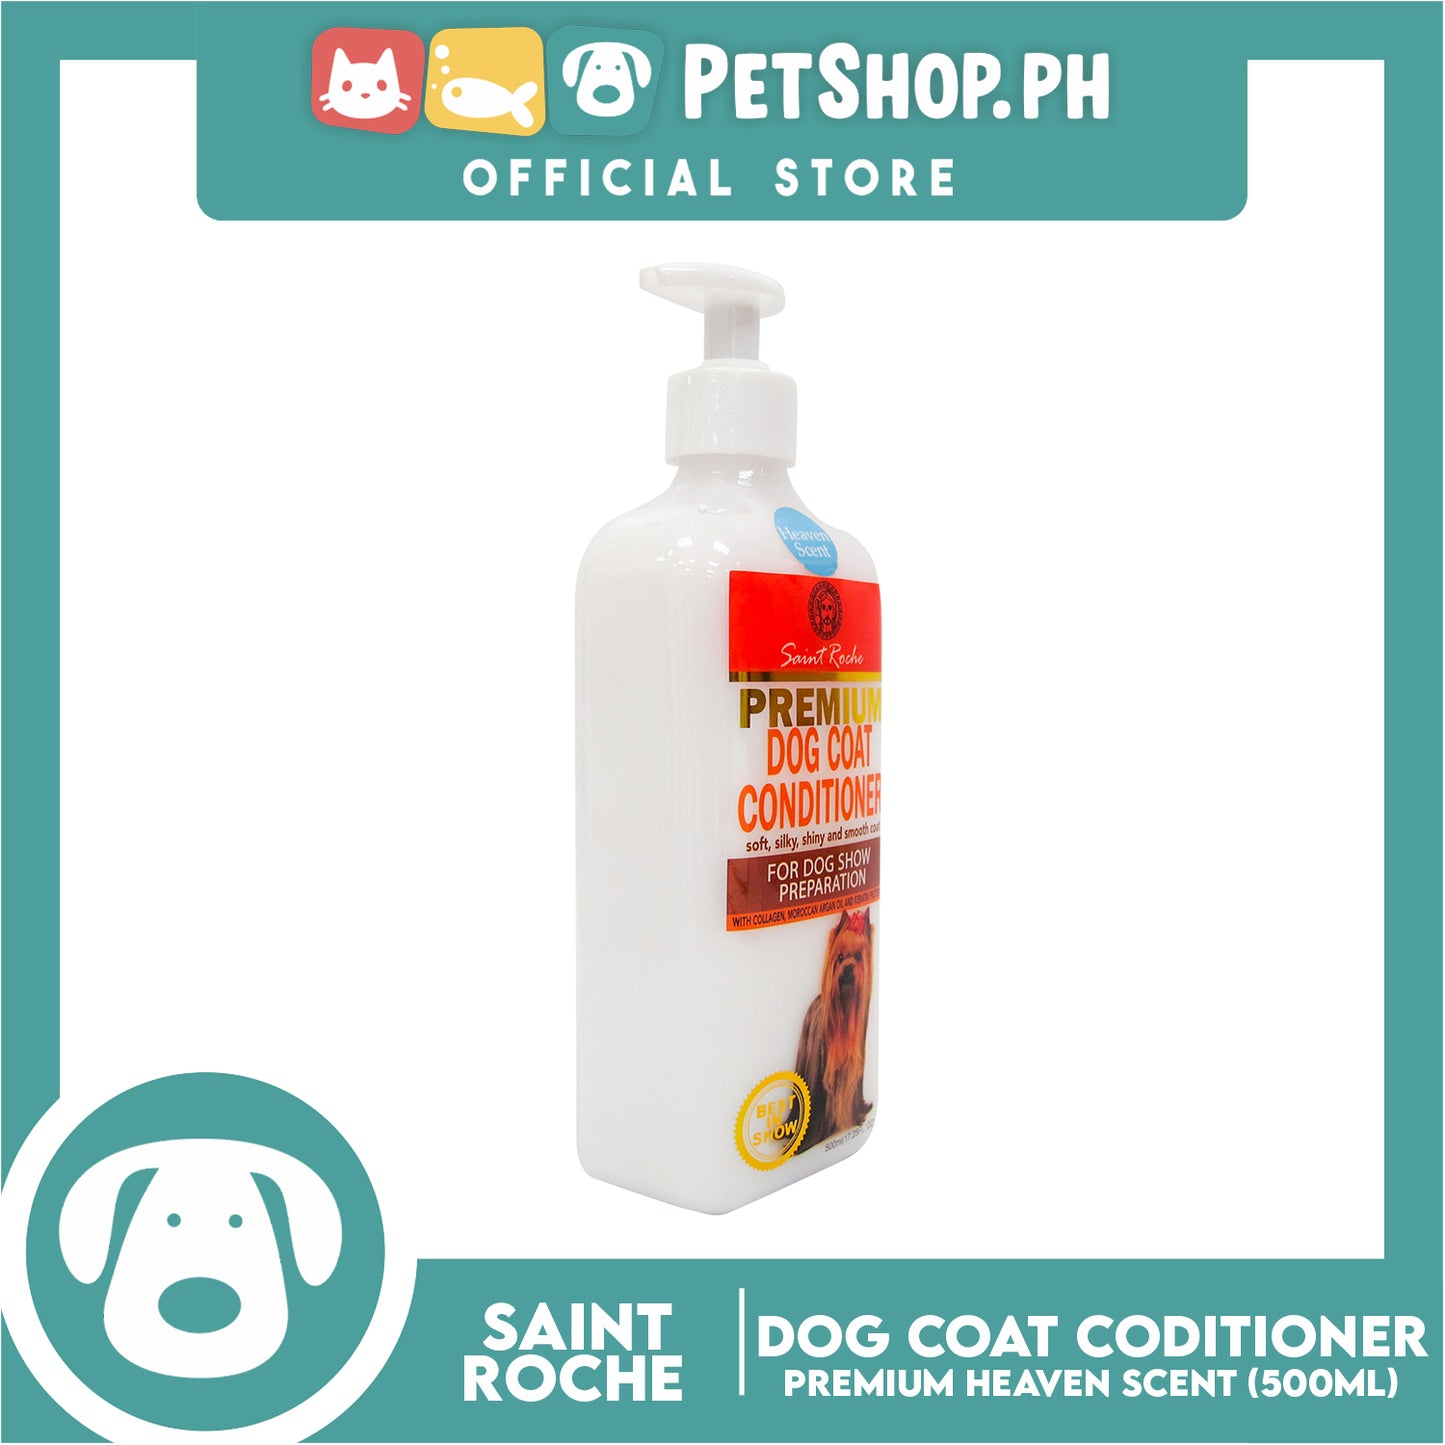 Saint Roche Premium Dog Coat Conditioner (Heaven Scent) 500ml For Dog Show Preparation